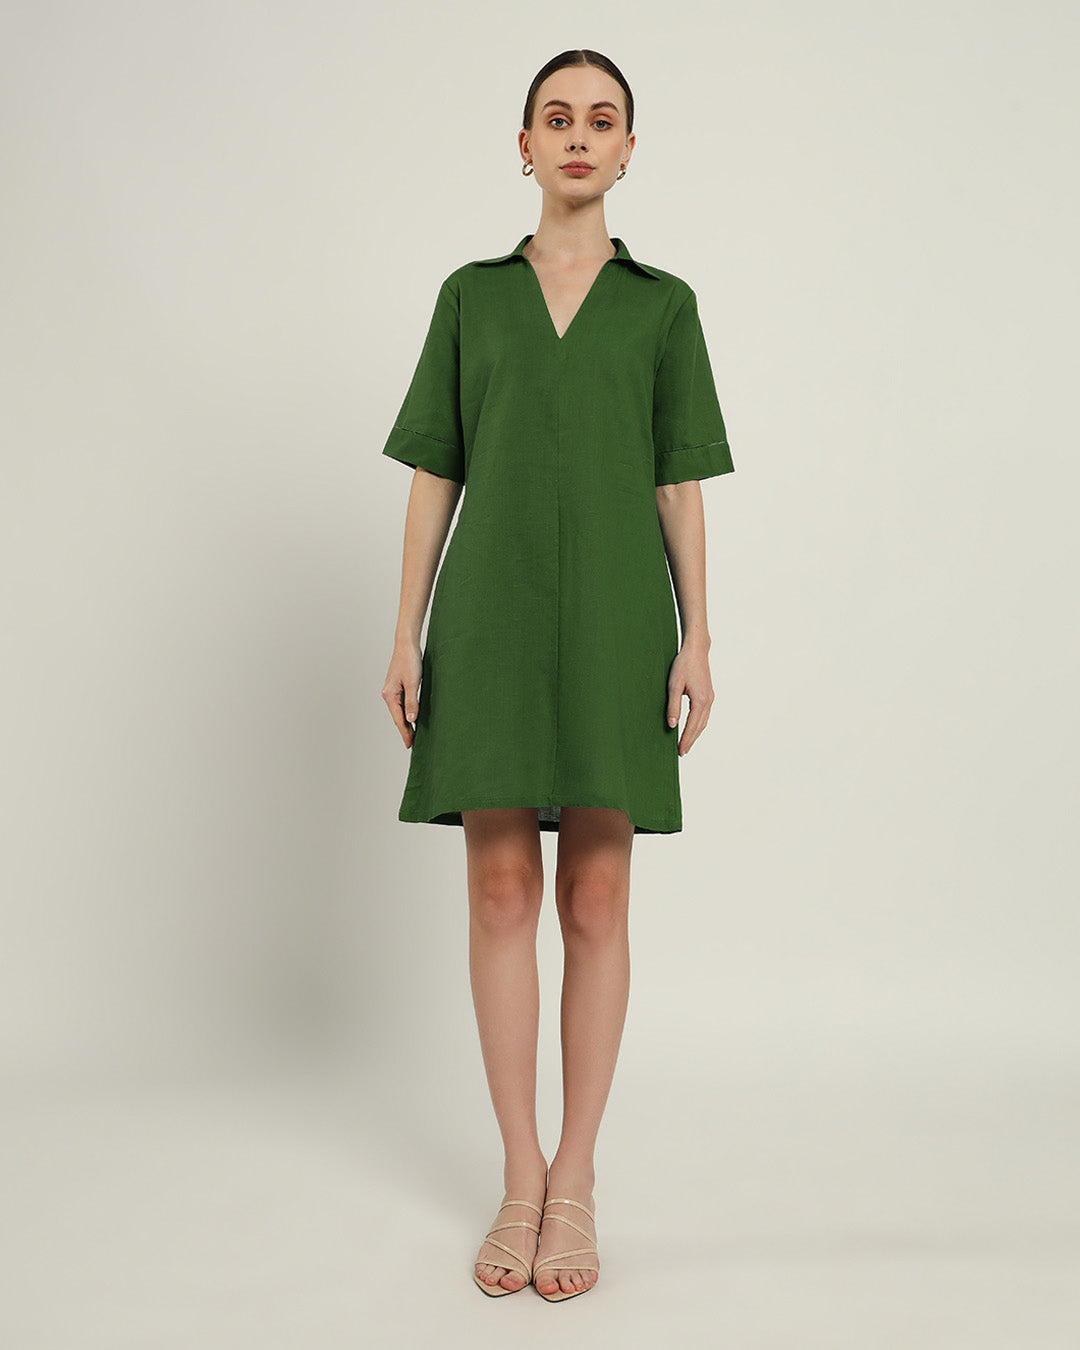 The Ermont Emerald Cotton Dress